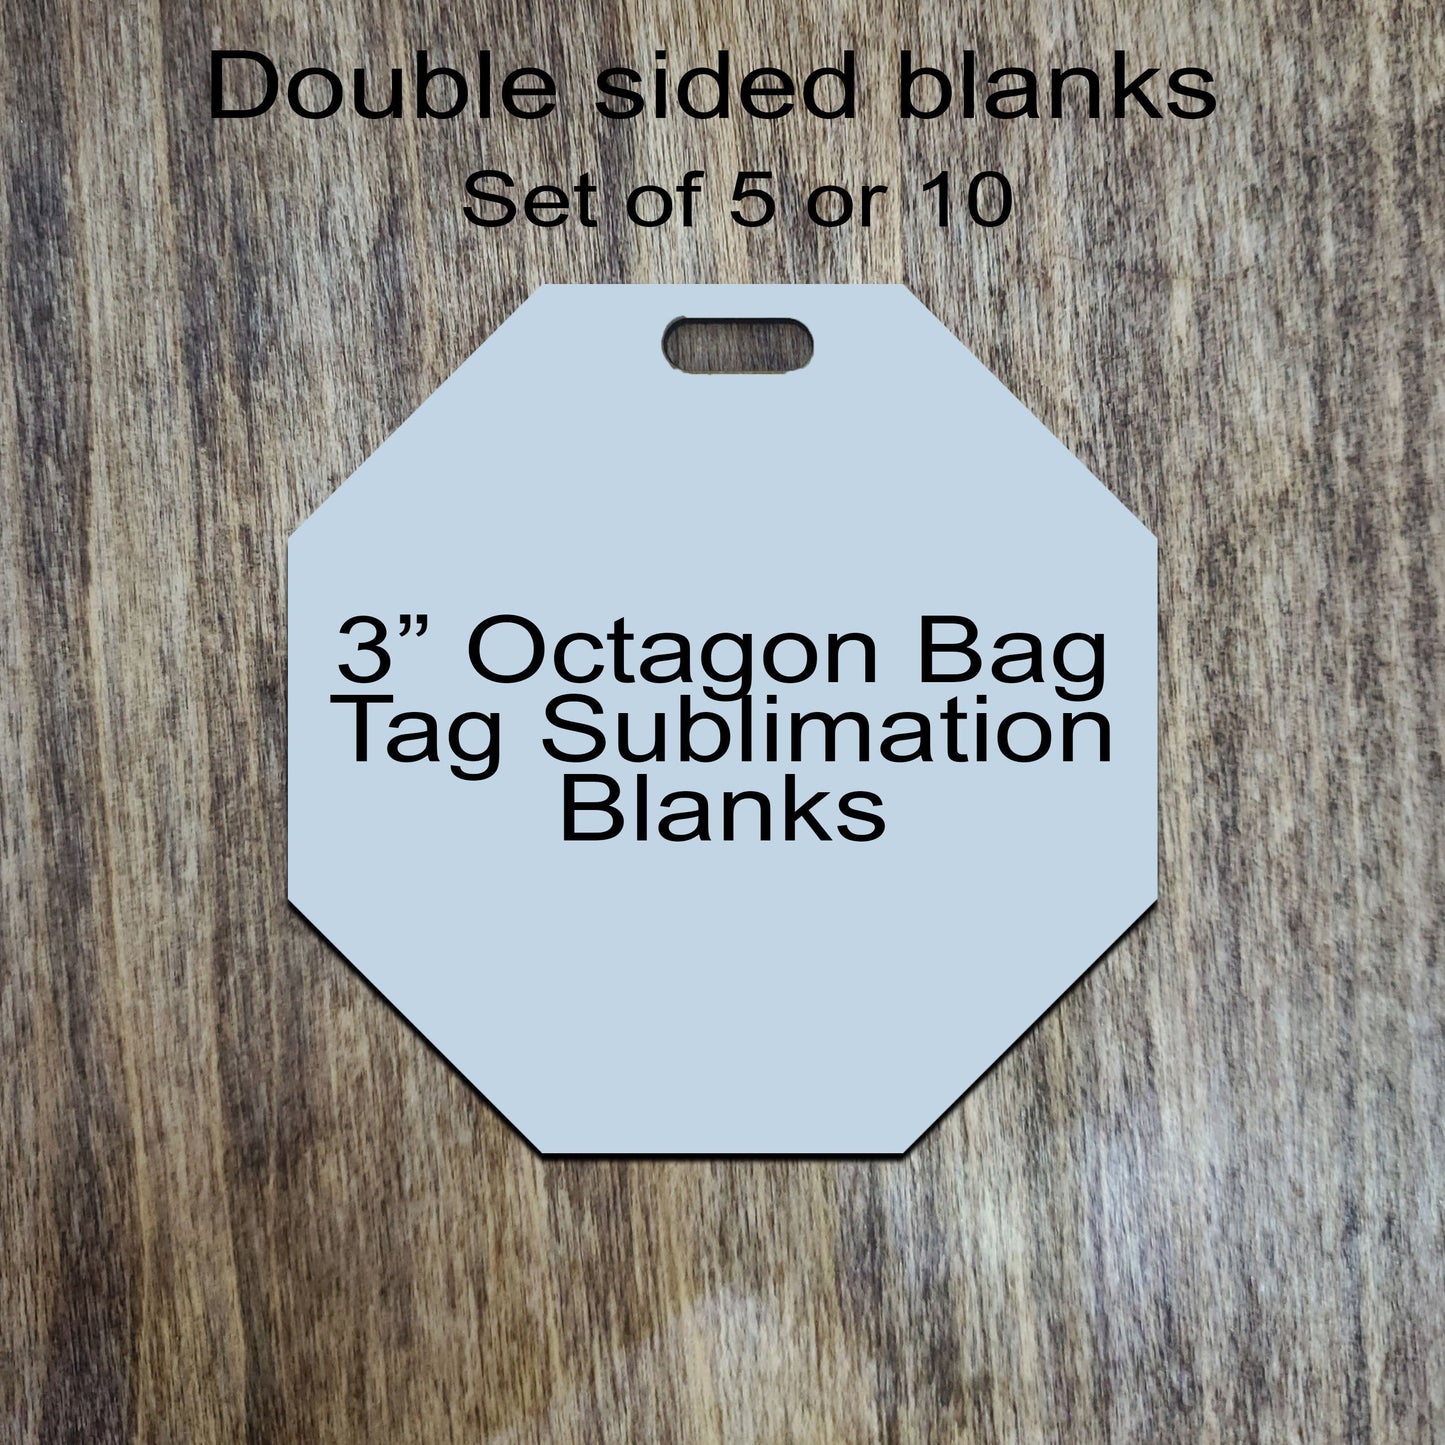 Set of 5 or 10 octagon hardboard blanks, 3" Octagon sublimation hardboard blank, DOUBLE-sided Octagon luggage tag sublimation blank